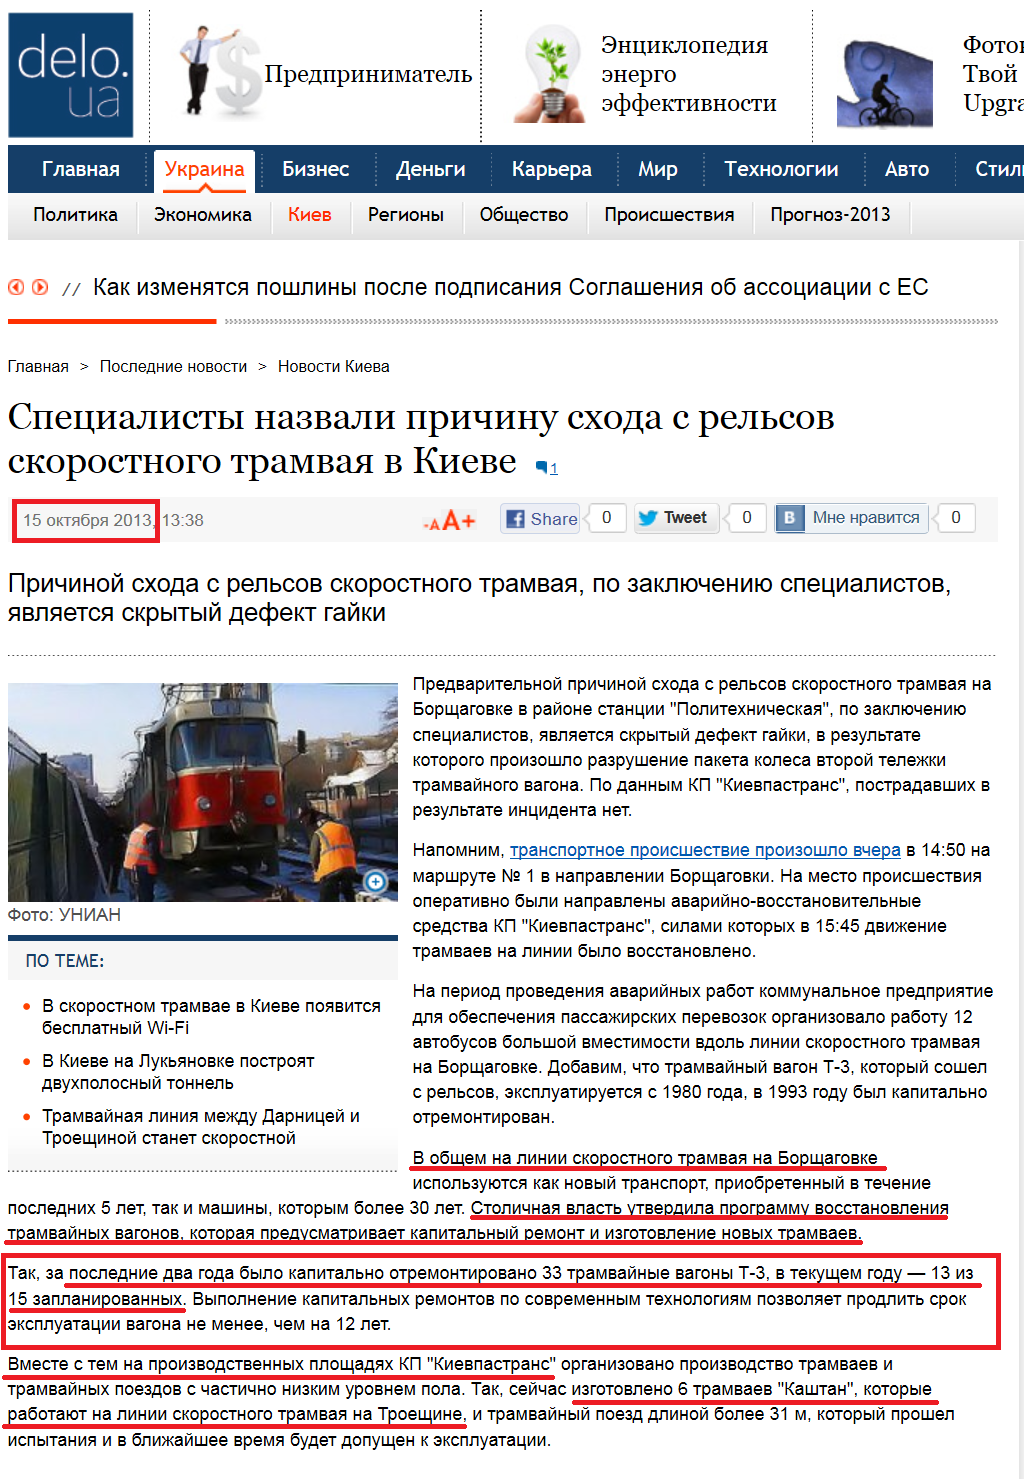 http://delo.ua/ukraine/specialisty-nazvali-prichinu-shoda-s-relsov-skorostnogo-tramvaja-217422/?supdated_new=1381992099